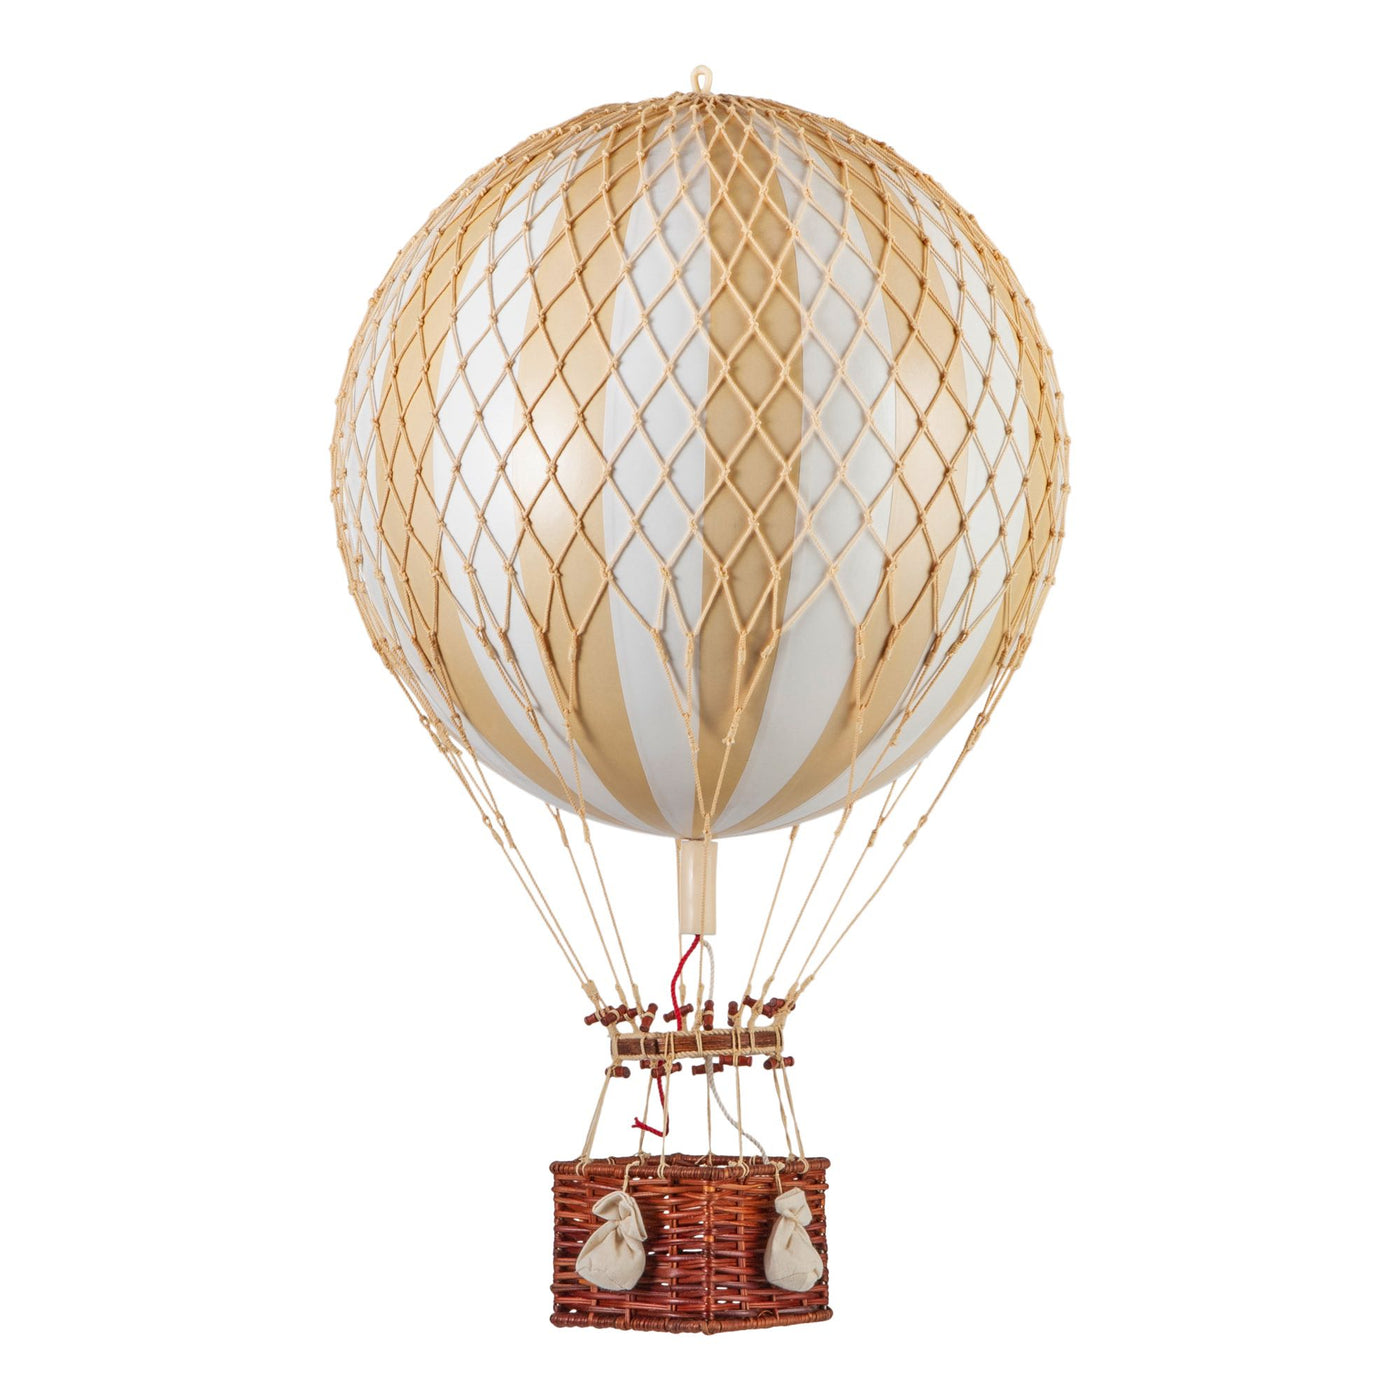 Luftballon White/Ivory, 32 cm. Royal Aero, Authentic Models